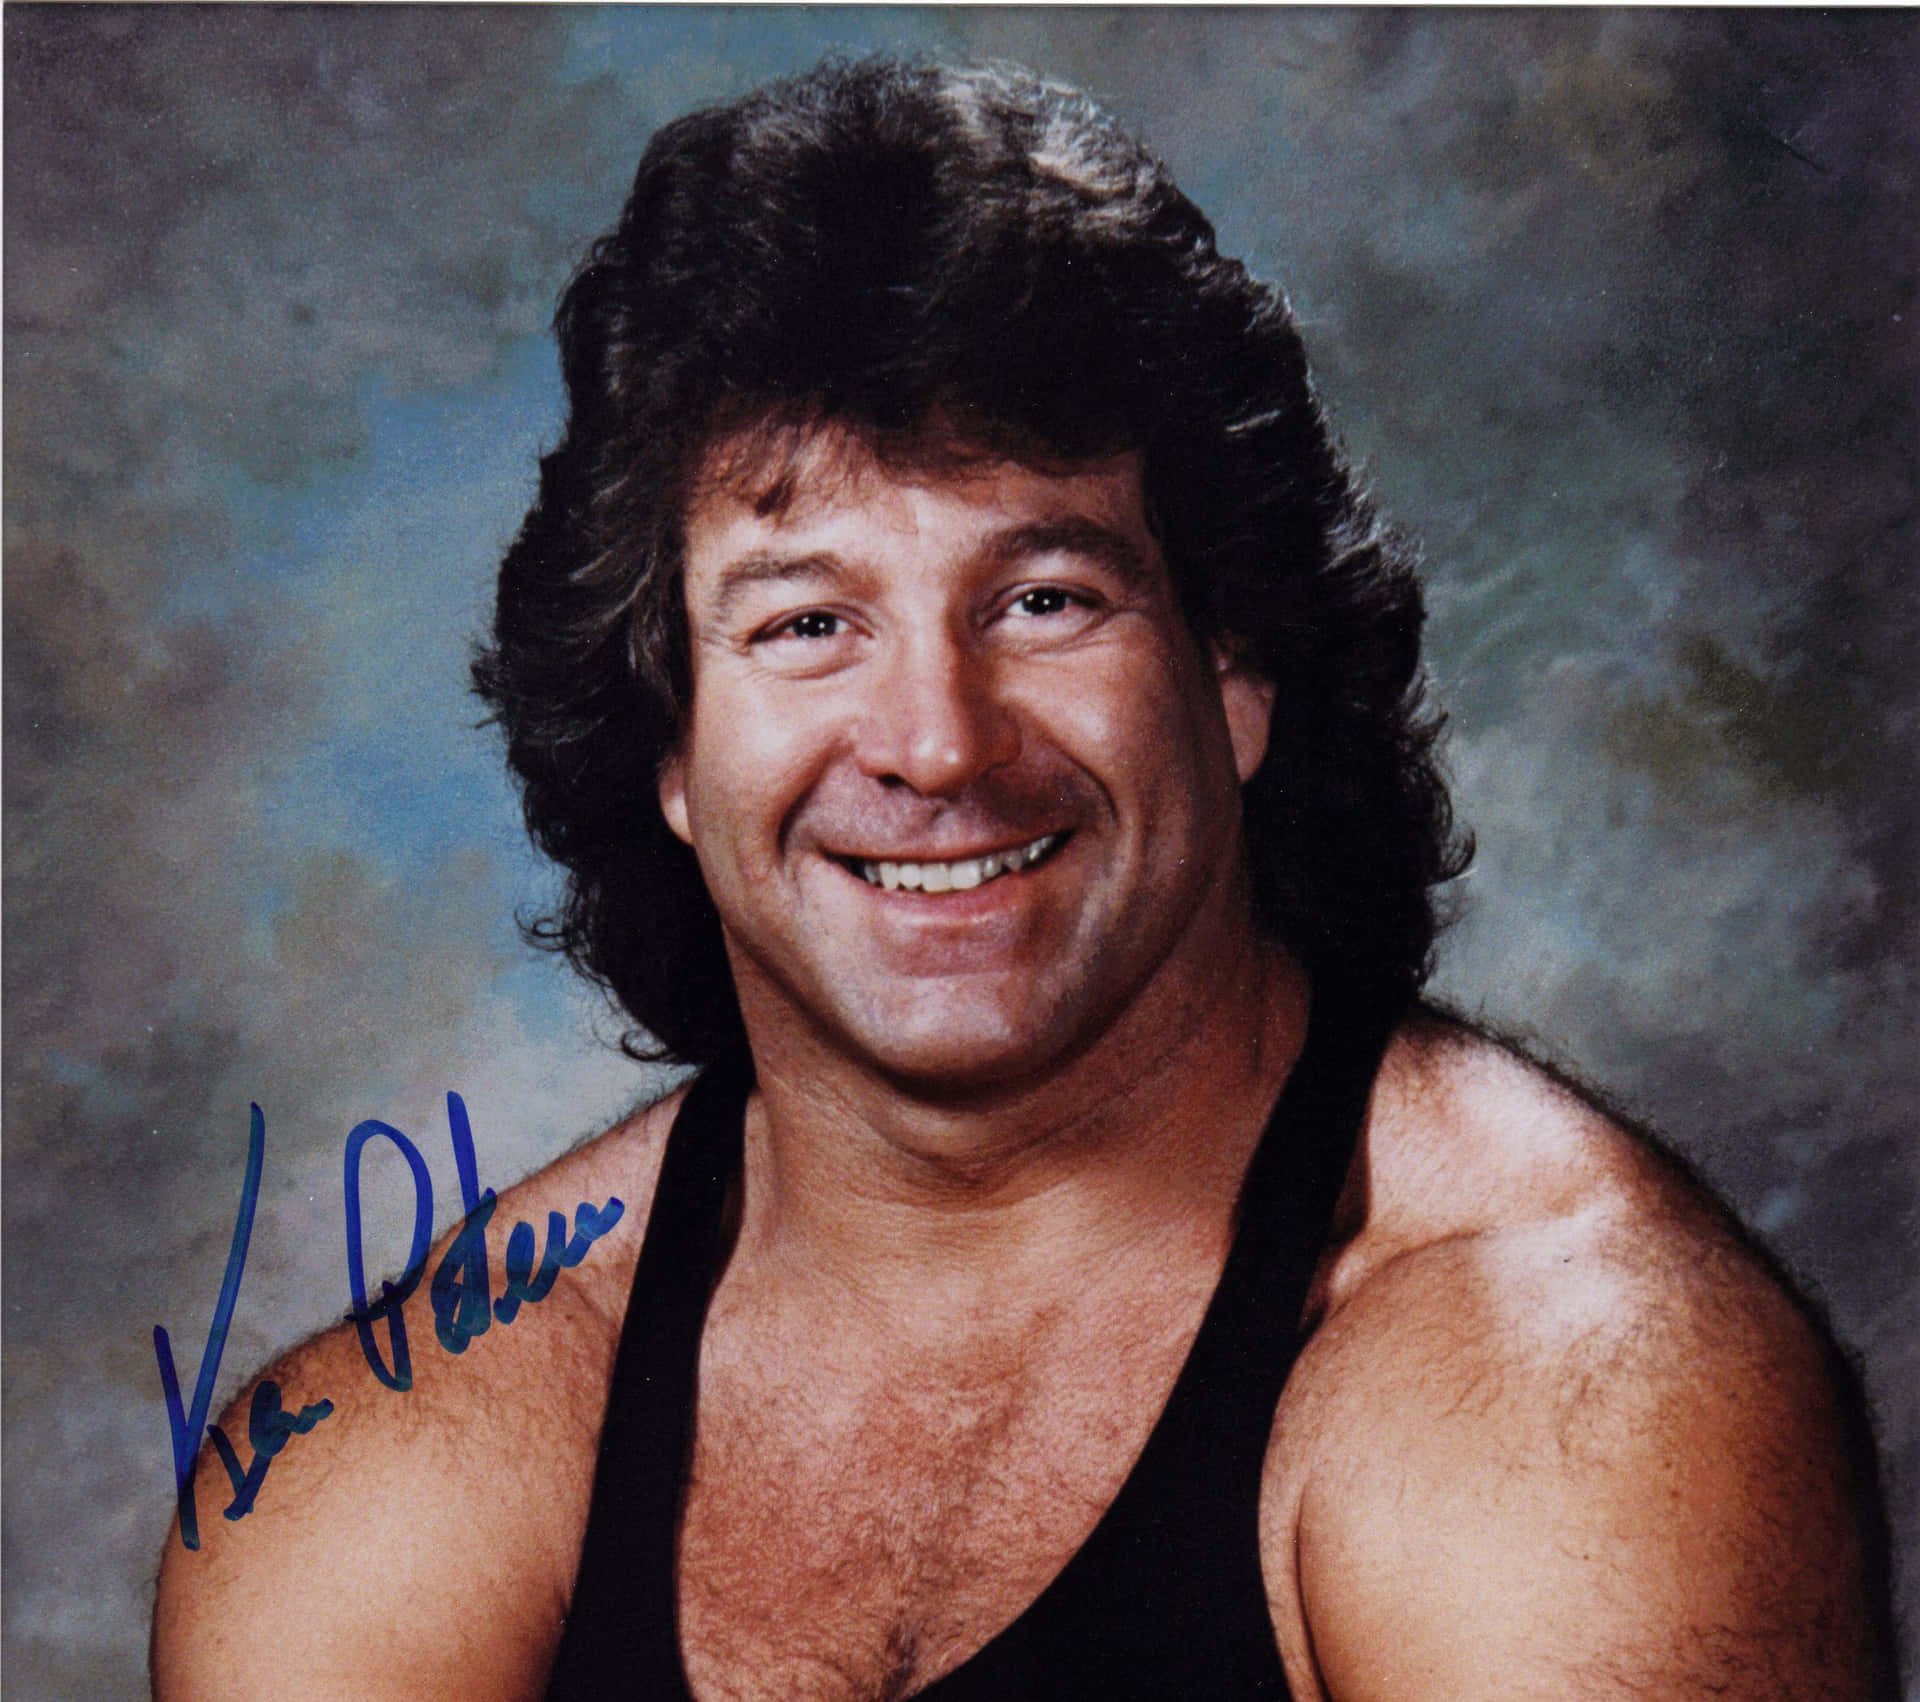 "Ken Patera - The legendary strength athlete and professional wrestler" Wallpaper